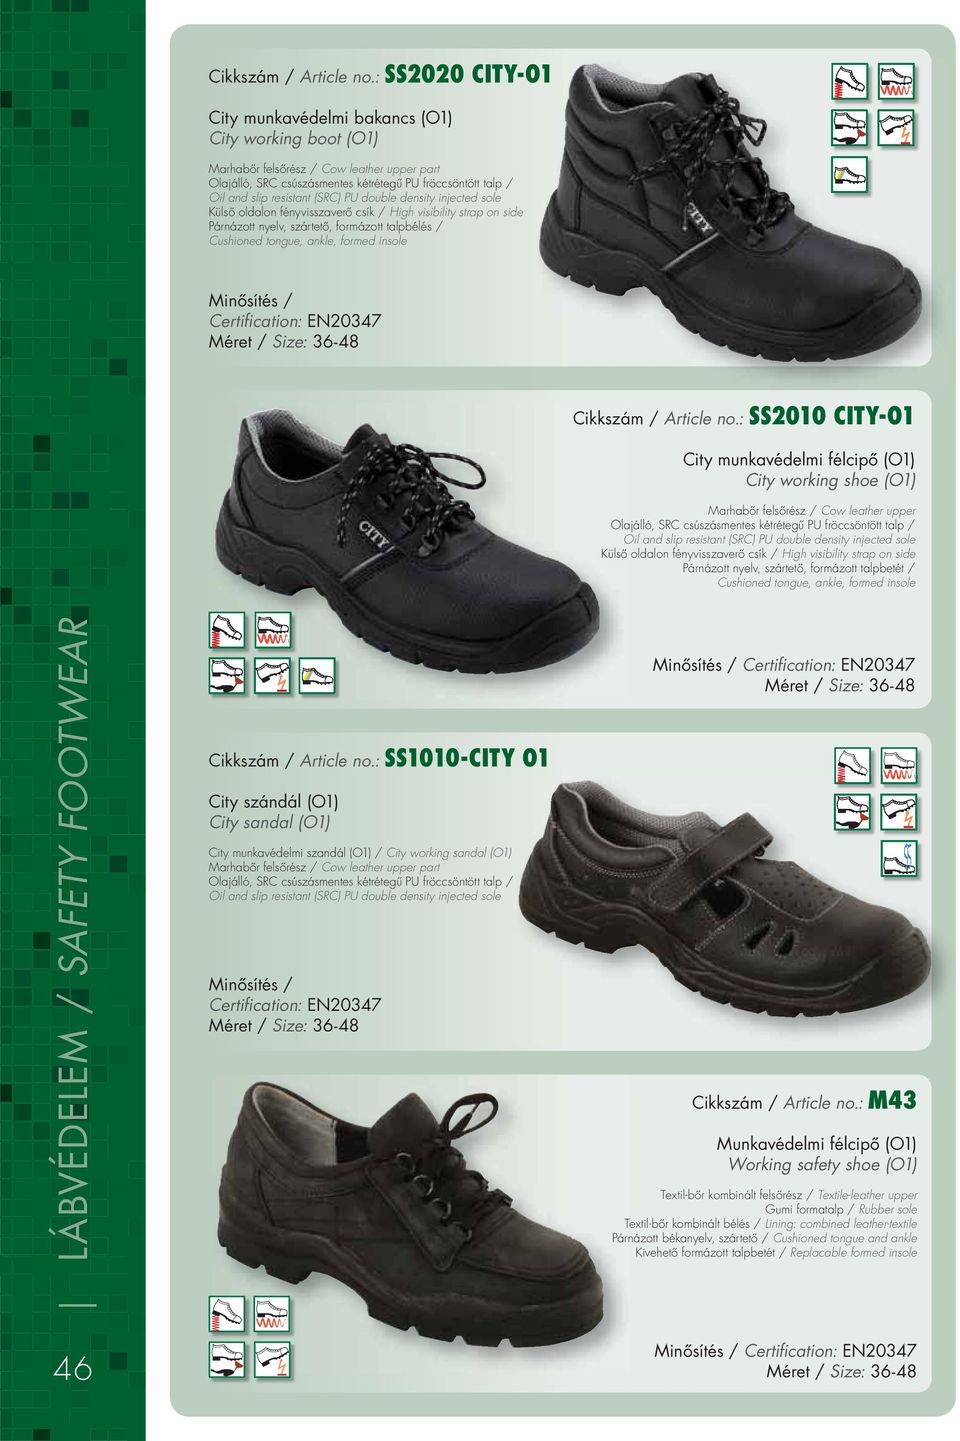 side Párnázott nyelv, szártetô, formázott talpbélés / Certification: EN20347 : SS2010 CITY-O1 City munkavédelmi félcipô (O1) City working shoe (O1) Oil and slip resistant (SRC) PU double density